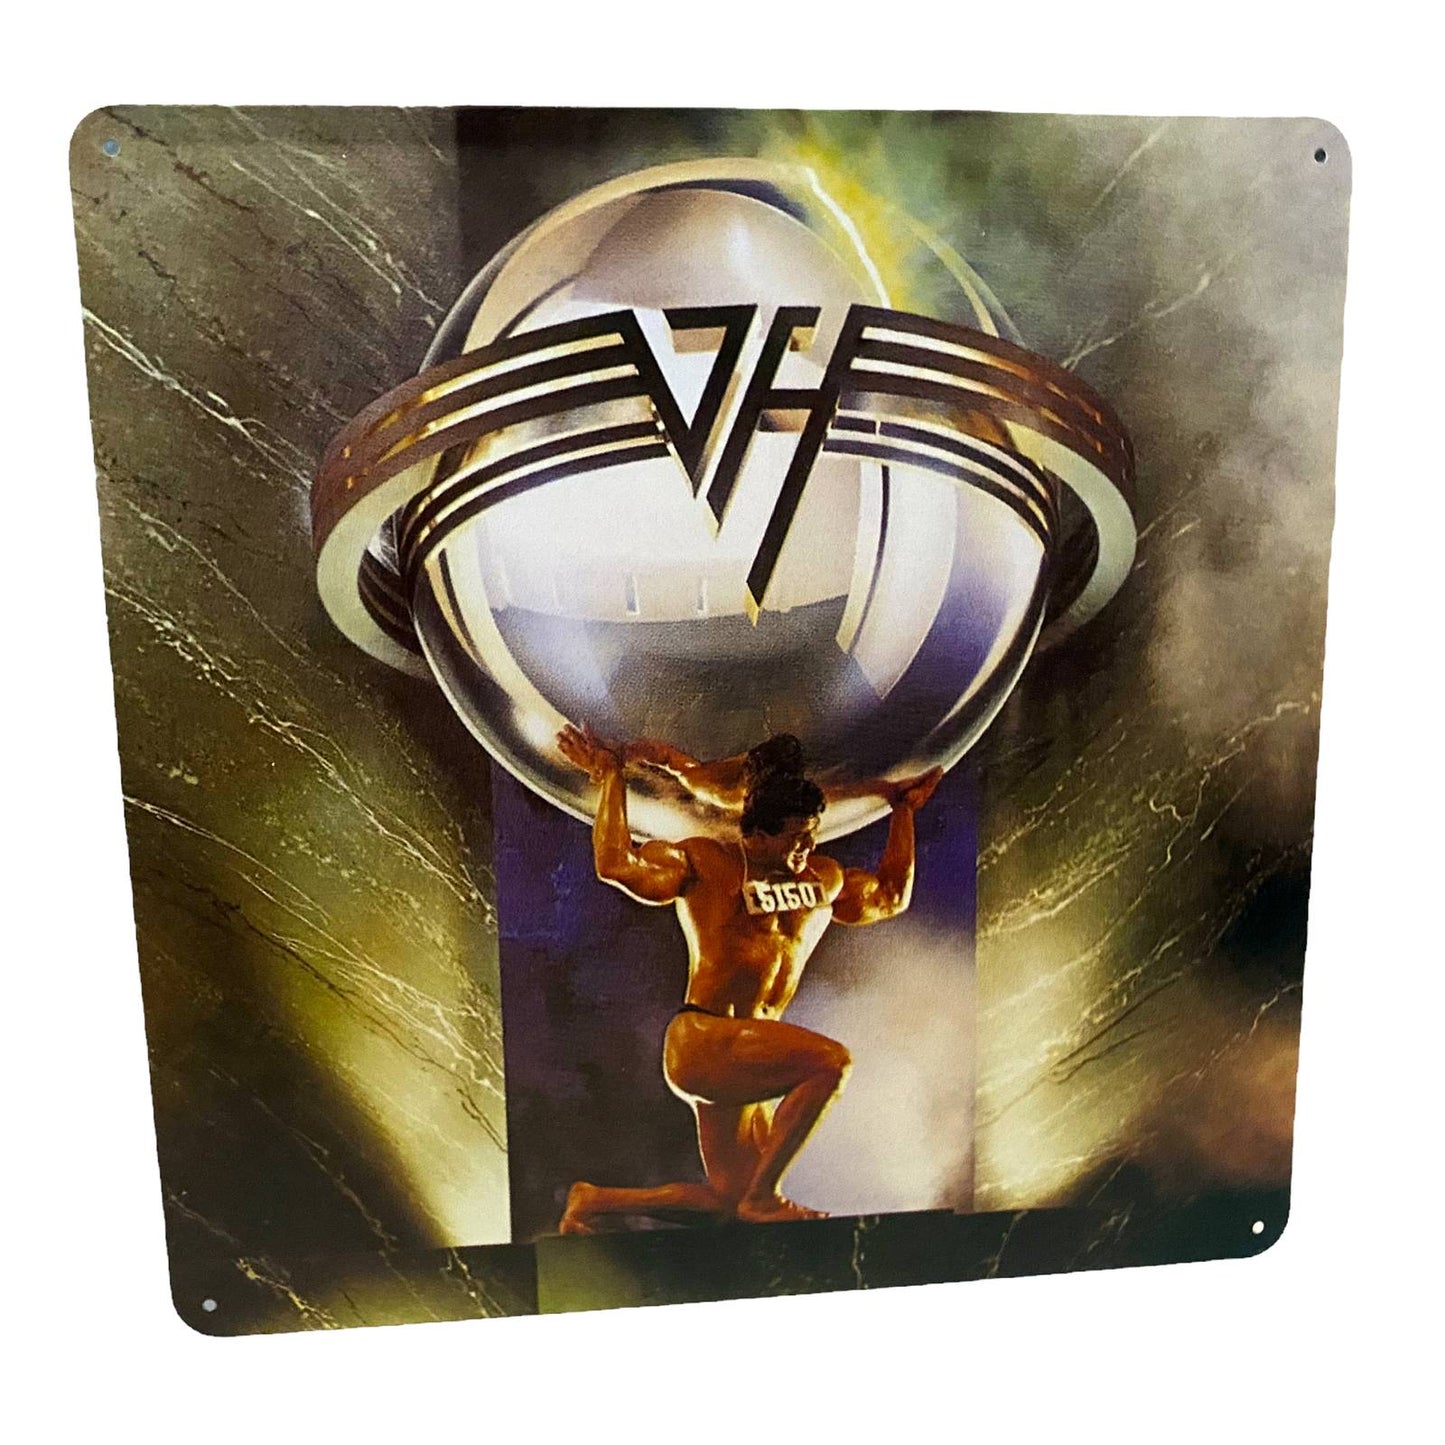 Van Halen 5150 Album Cover Metal Print Tin Sign 12"x 12"